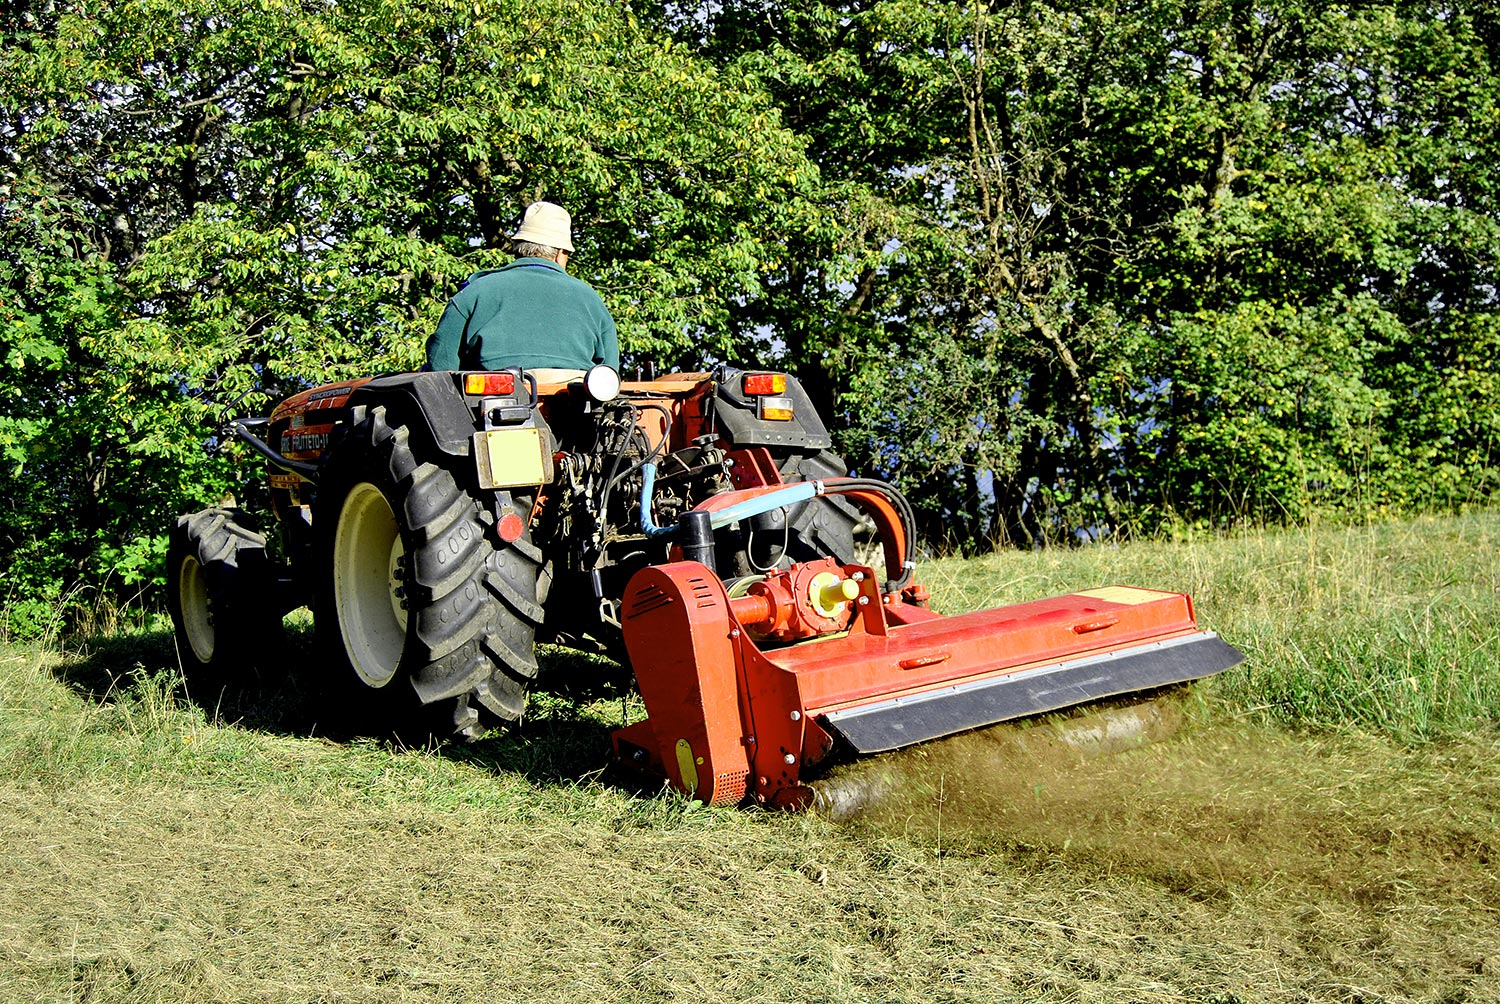 Small farm tractor bush hogging on a grass field